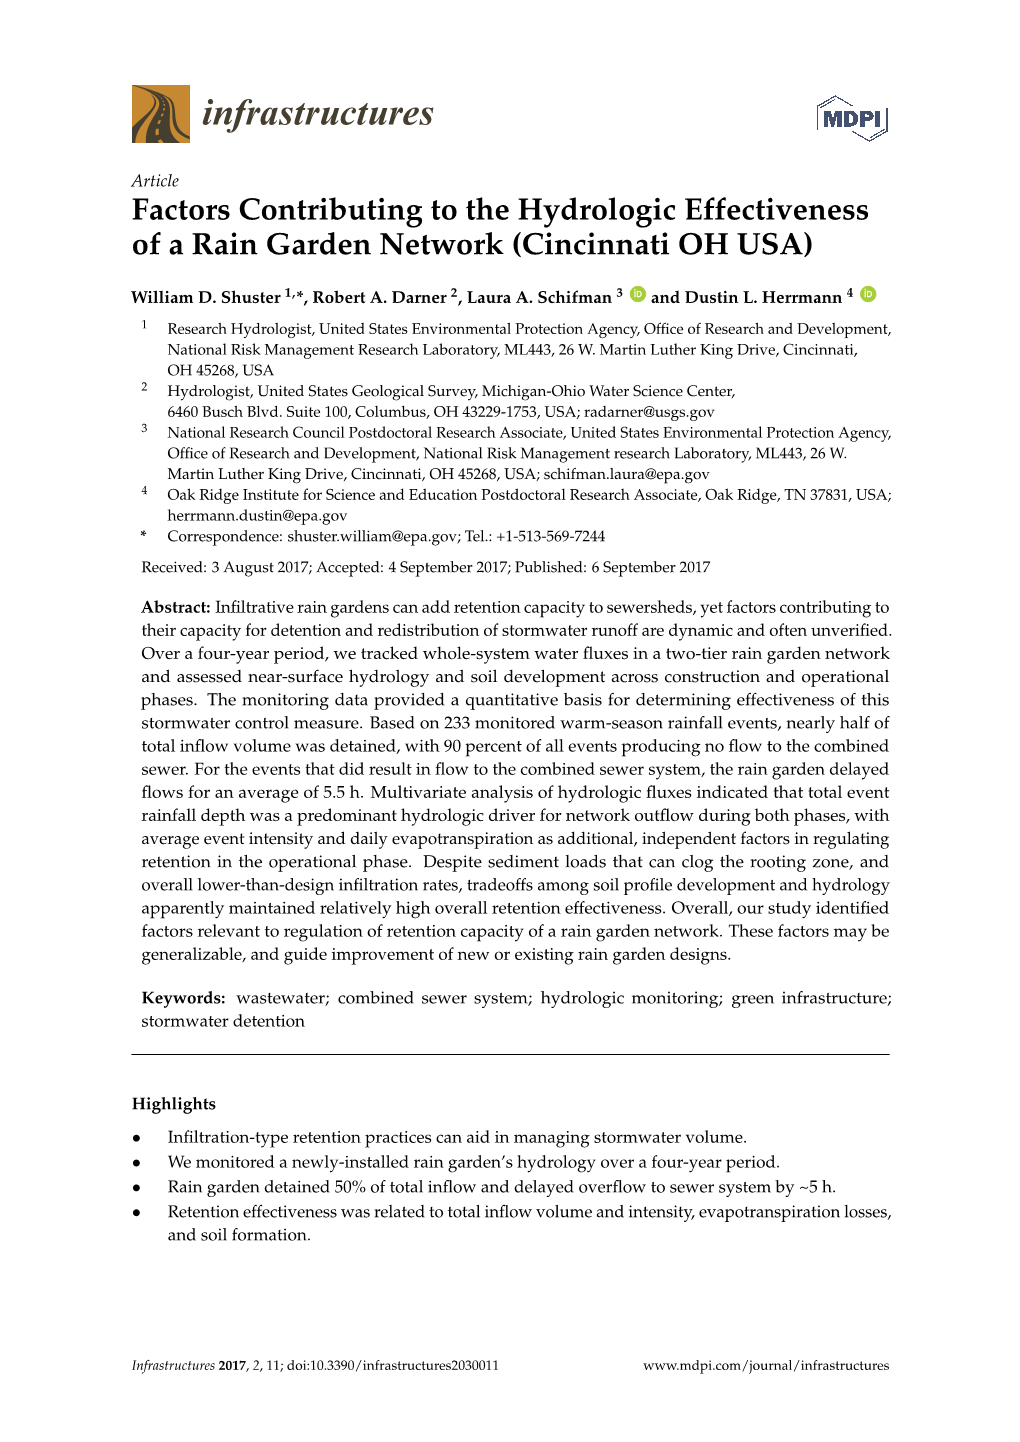 Factors Contributing to the Hydrologic Effectiveness of a Rain Garden Network (Cincinnati OH USA)